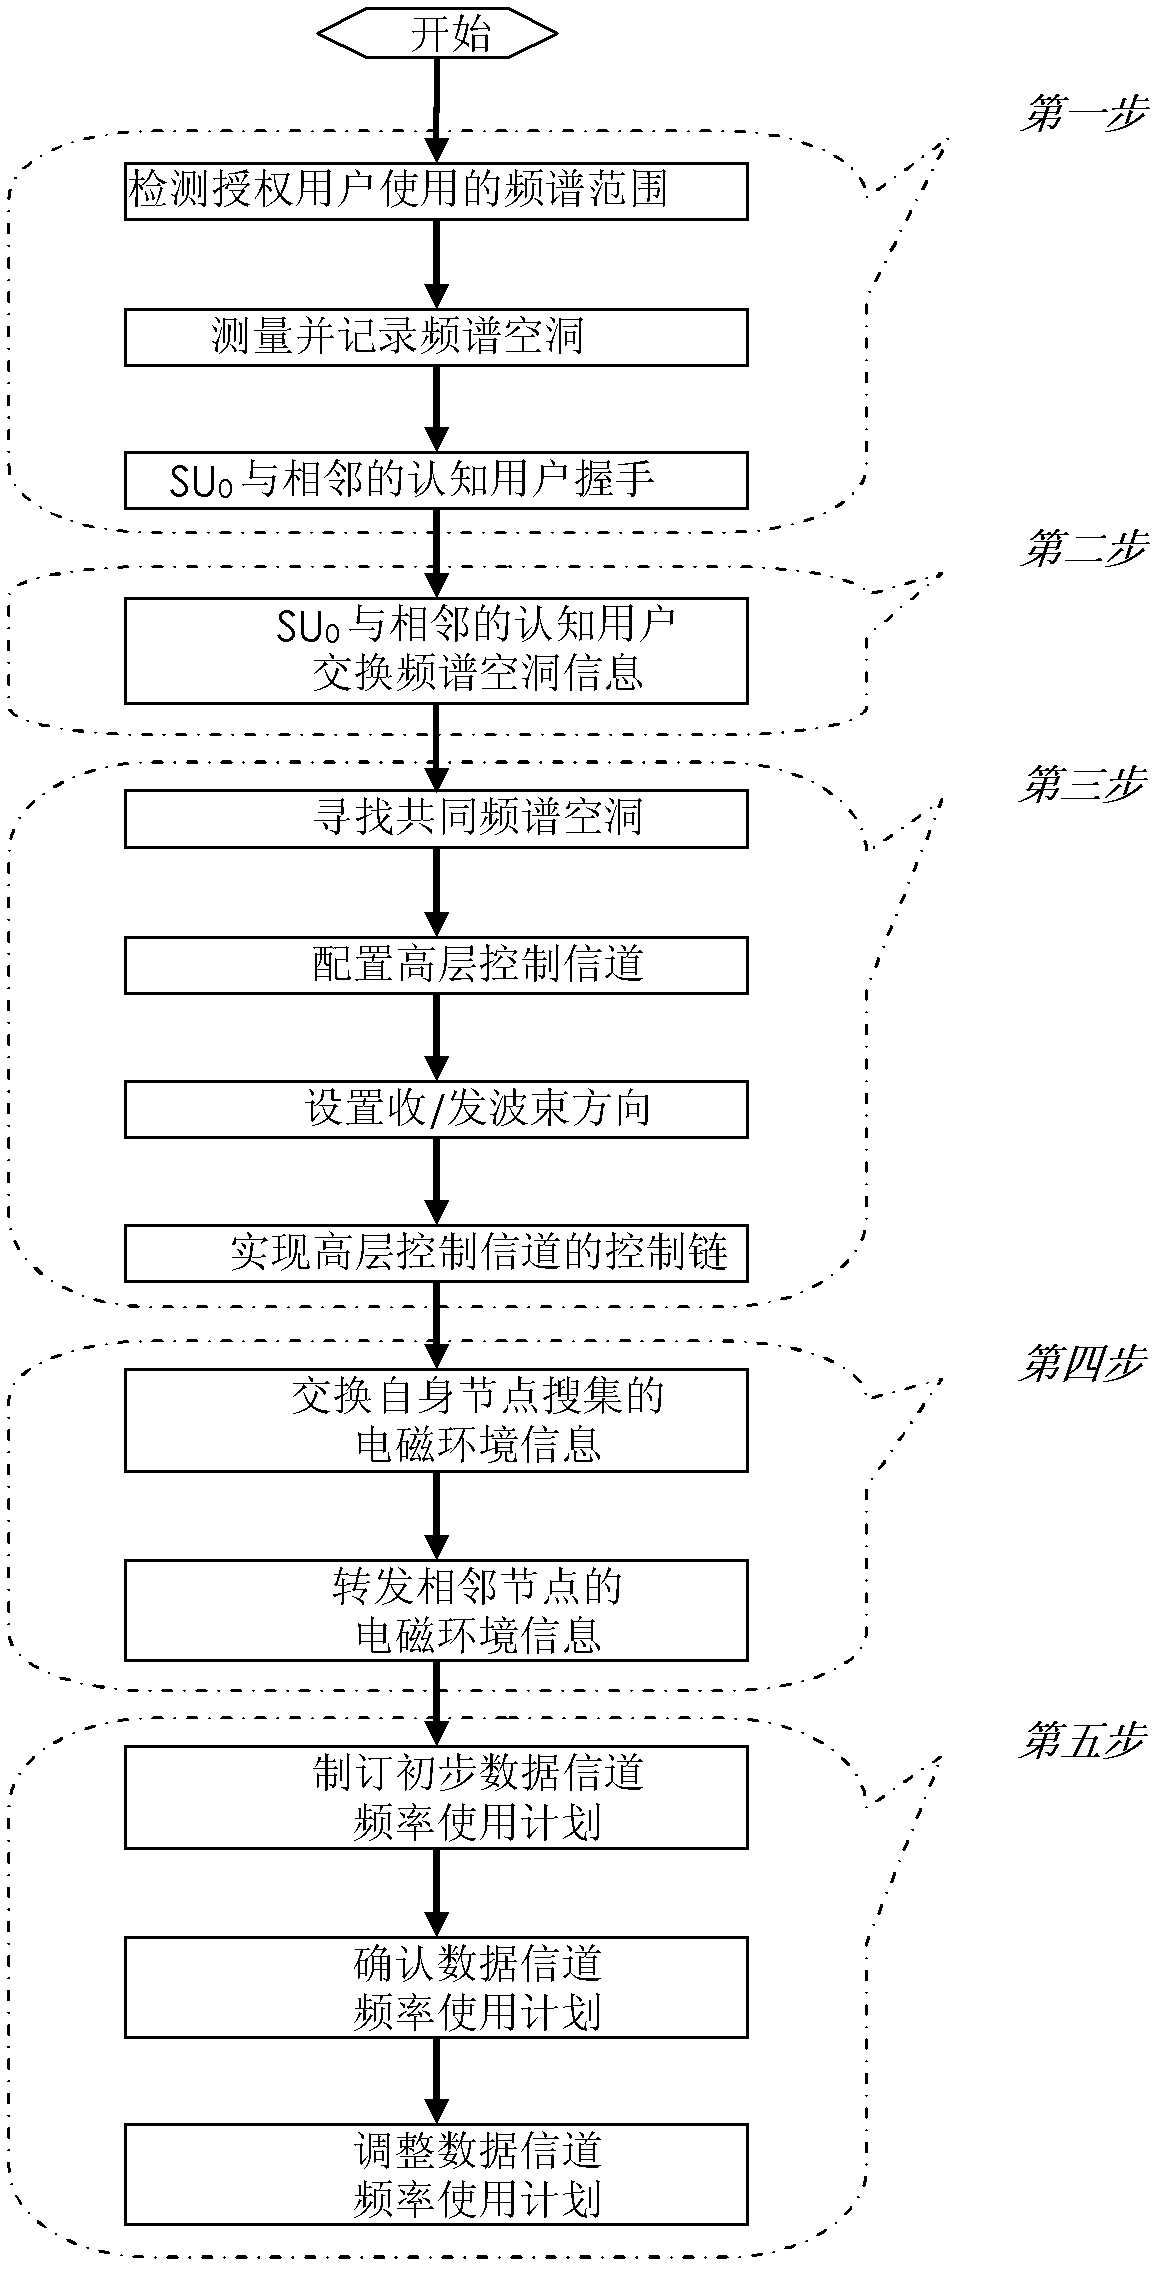 Hierarchical-control-channel-mechanism-based cognitive radio network establishment method